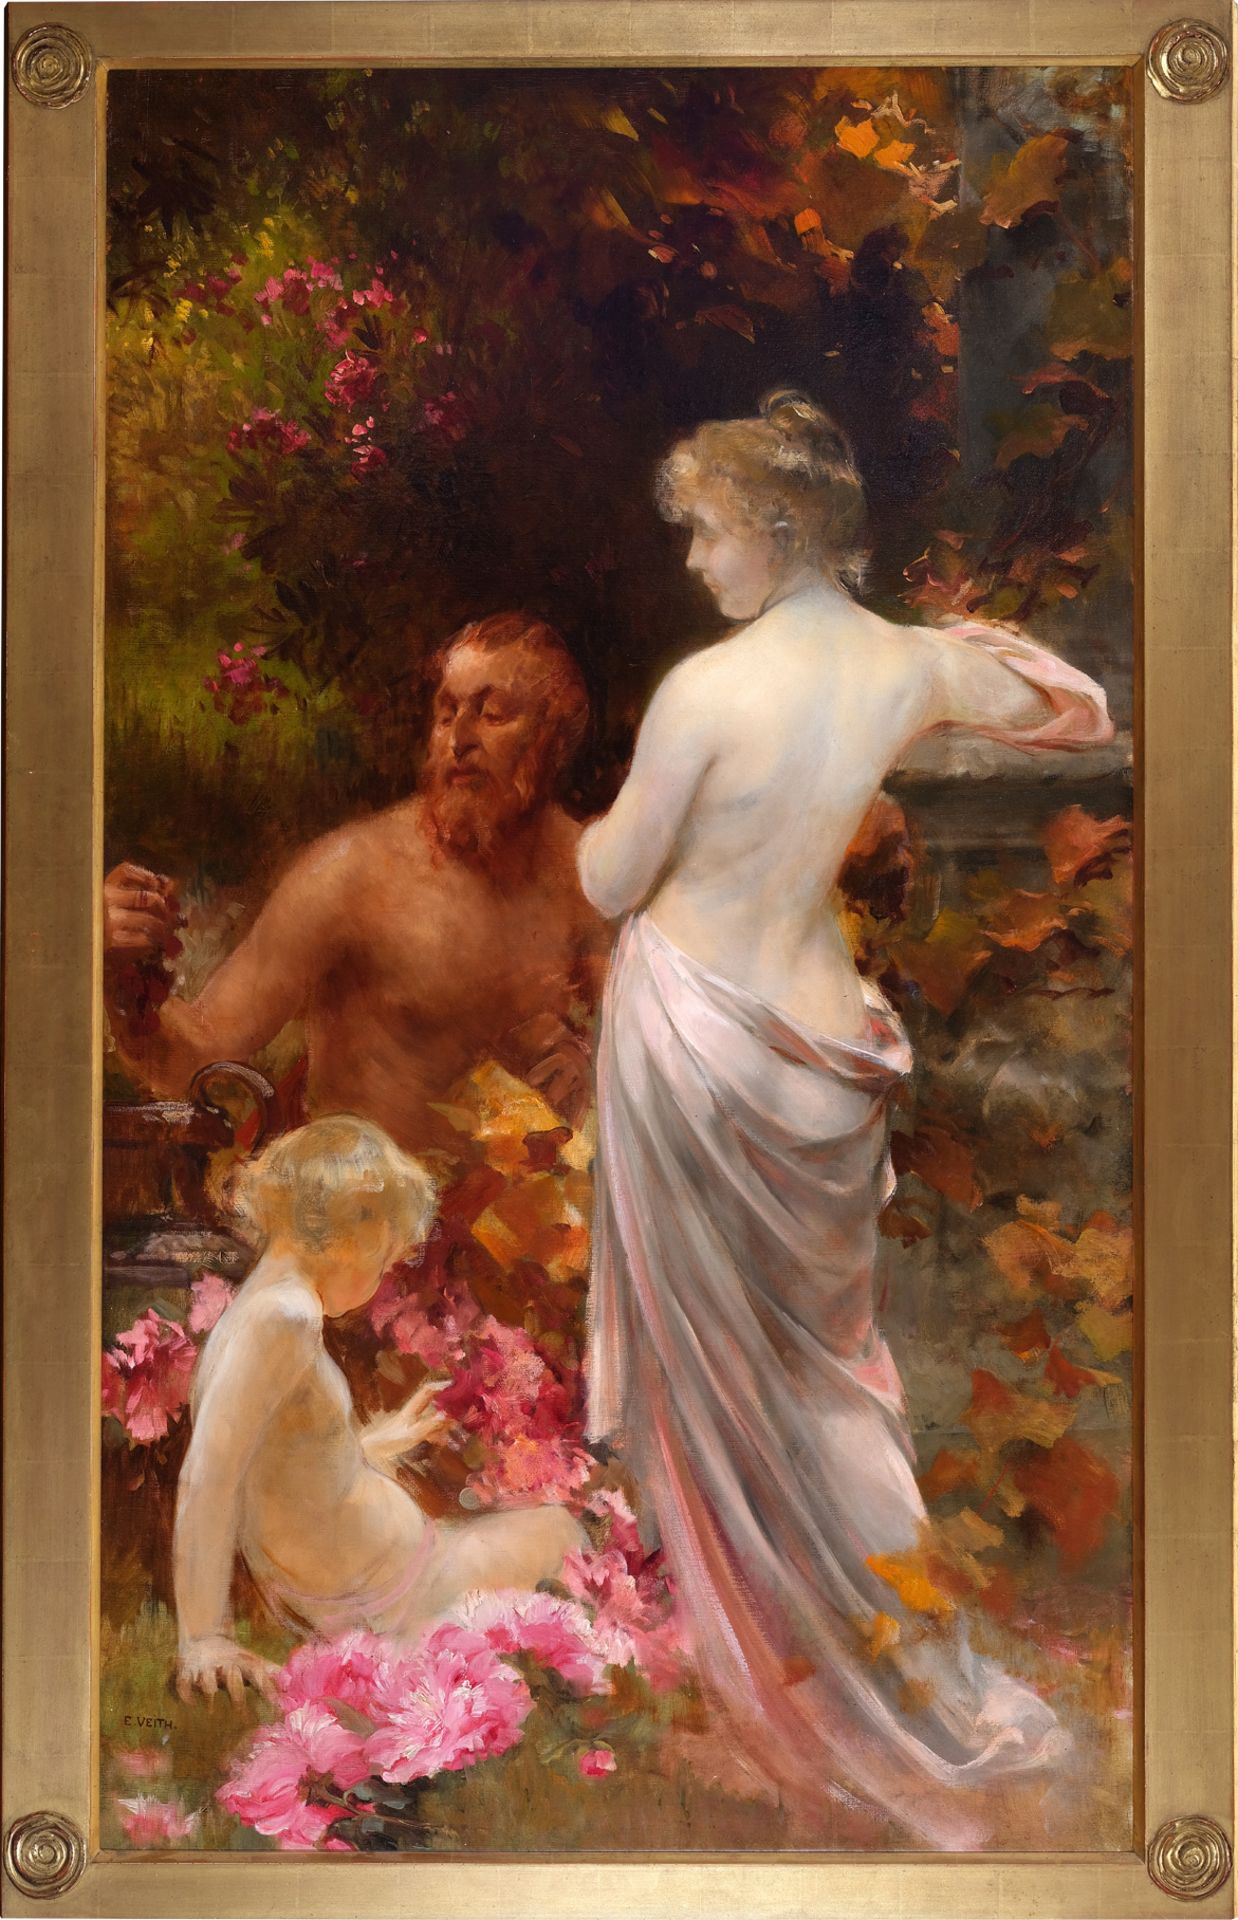 Eduard Veith, Neutitschein 1858 - 1925 Vienna, Faun & nymph with putto as the allegory of autumn